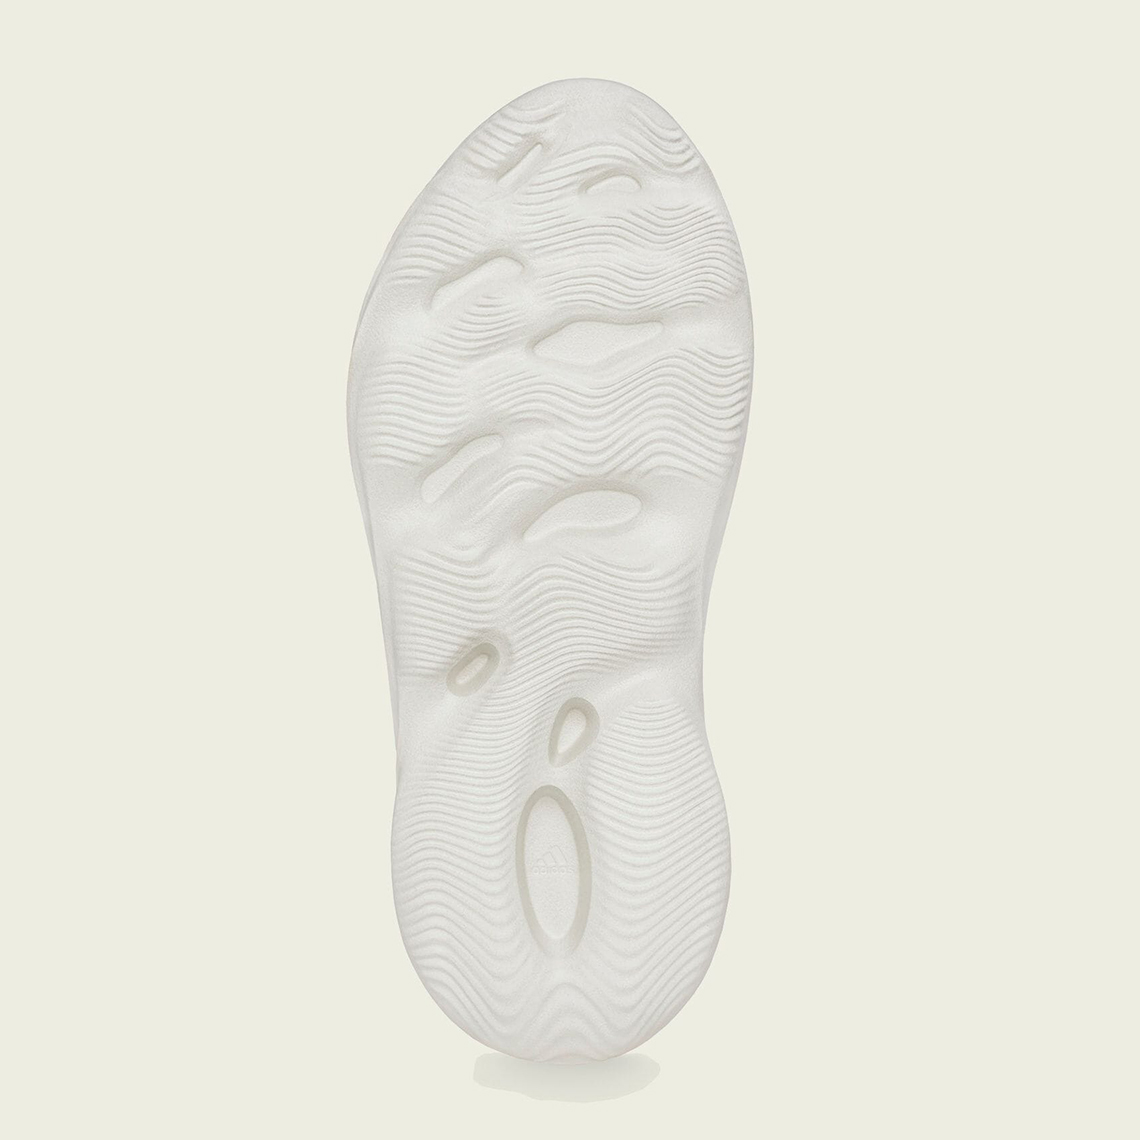 adidas yeezy foam runner sand FY4567 2022 release date 1